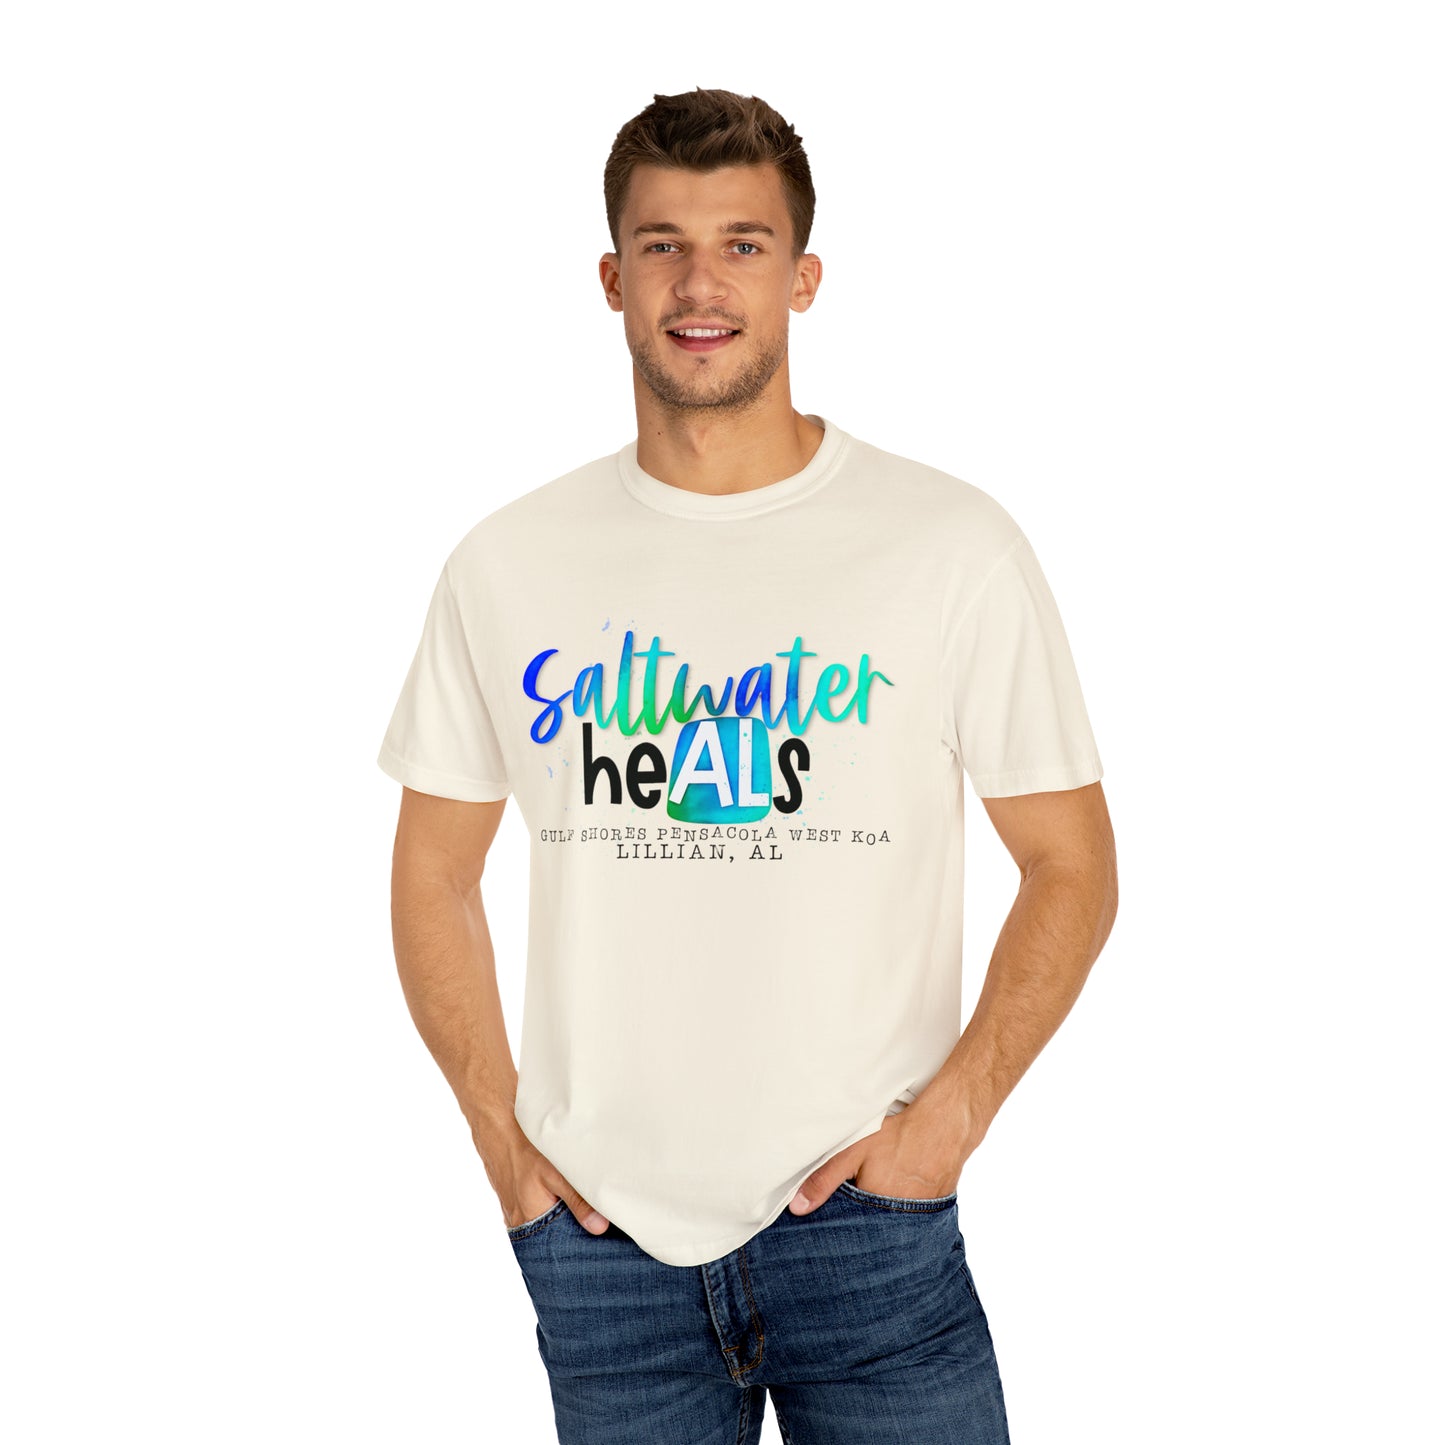 Unisex Garment-Dyed T-shirt